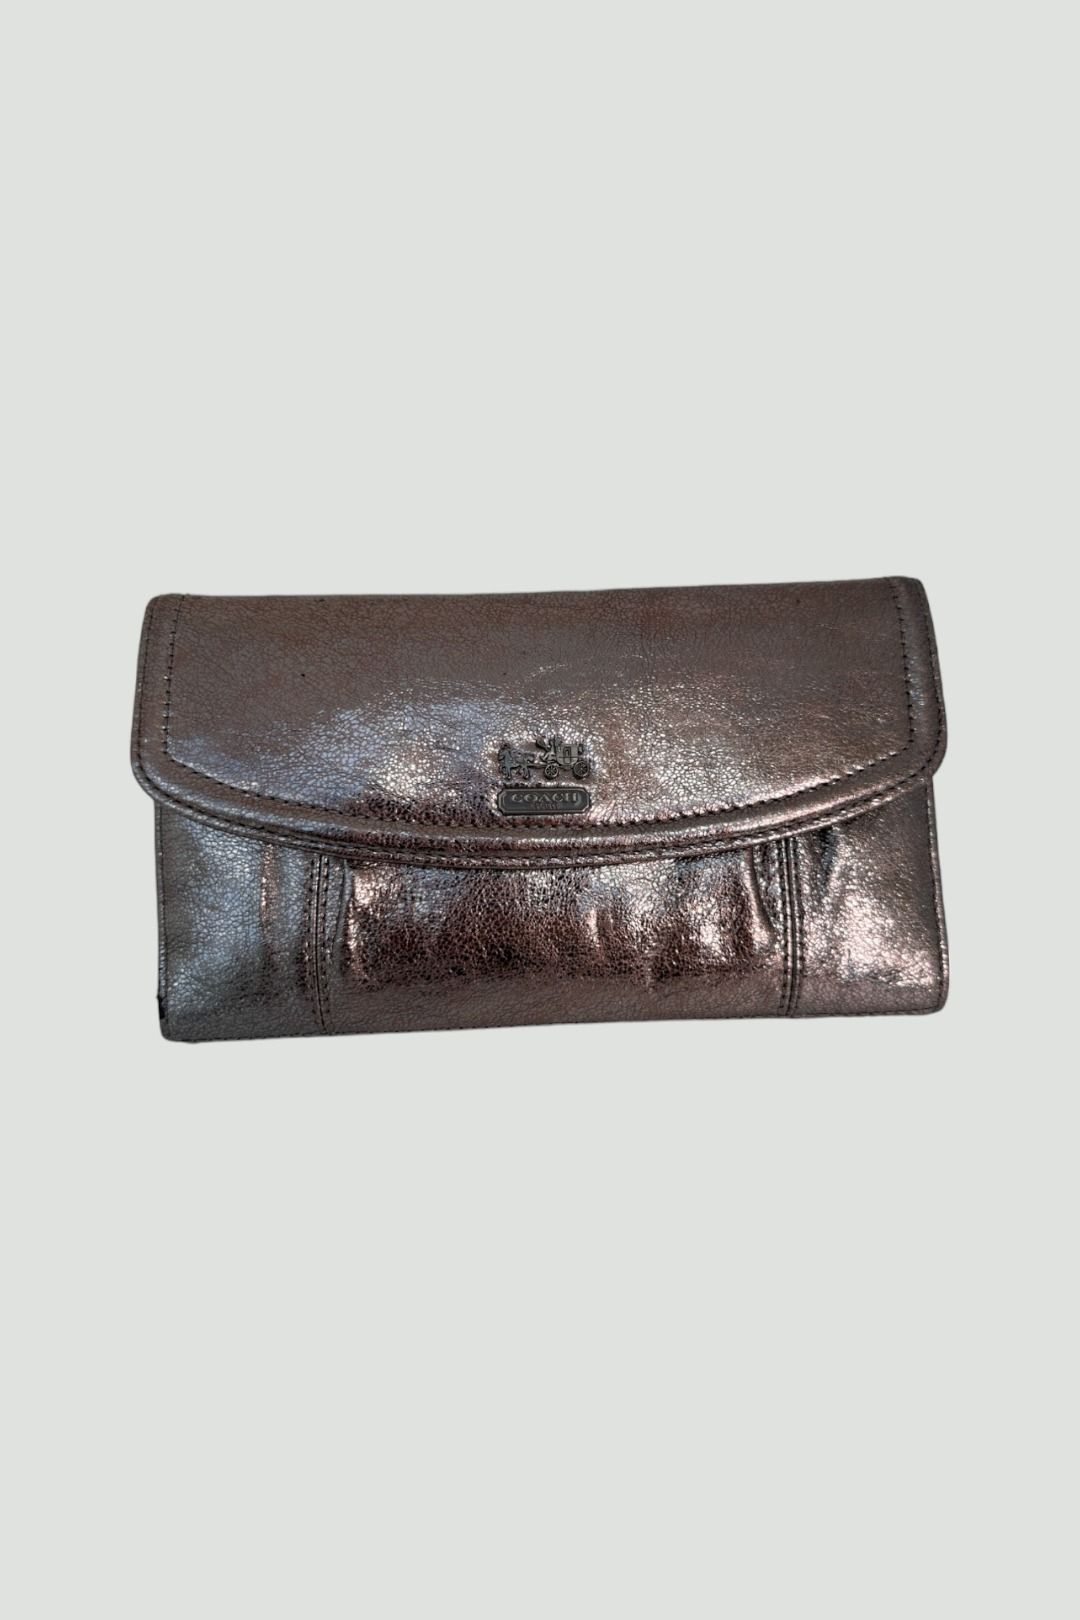 Coach Leather Wallet in Metallic Gunmetal